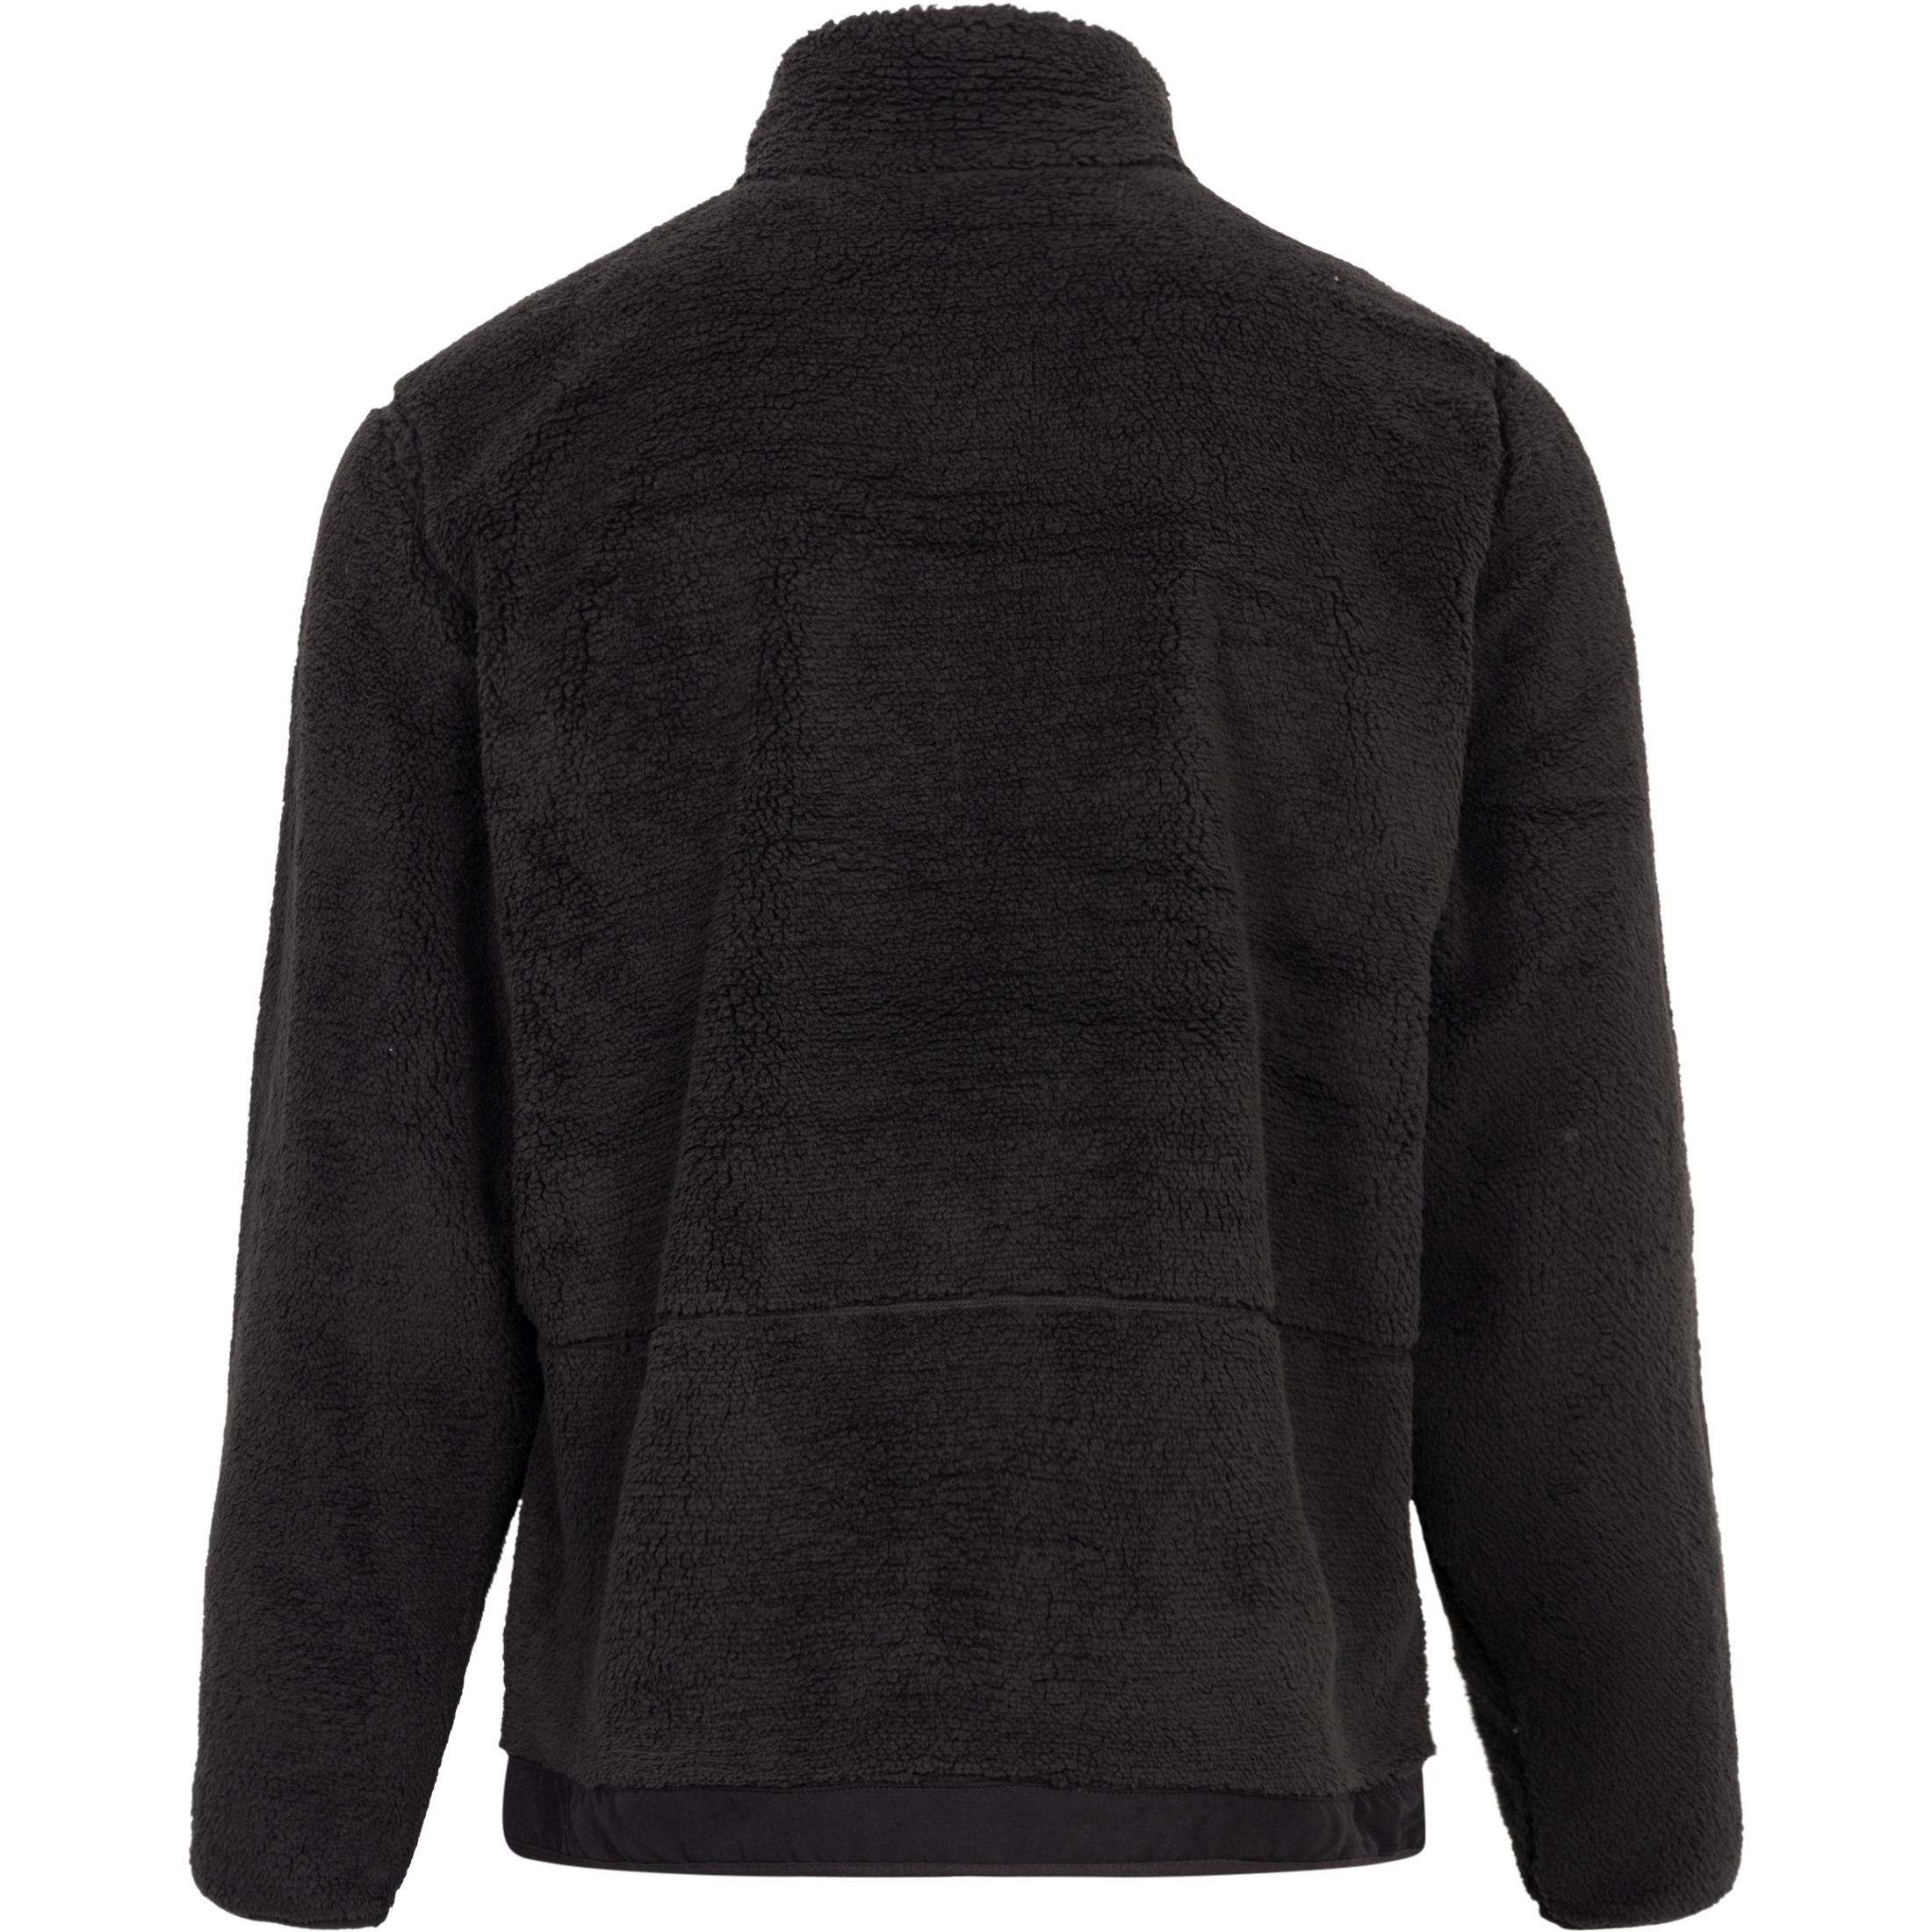 M Campshire Fleece Jacket - Black